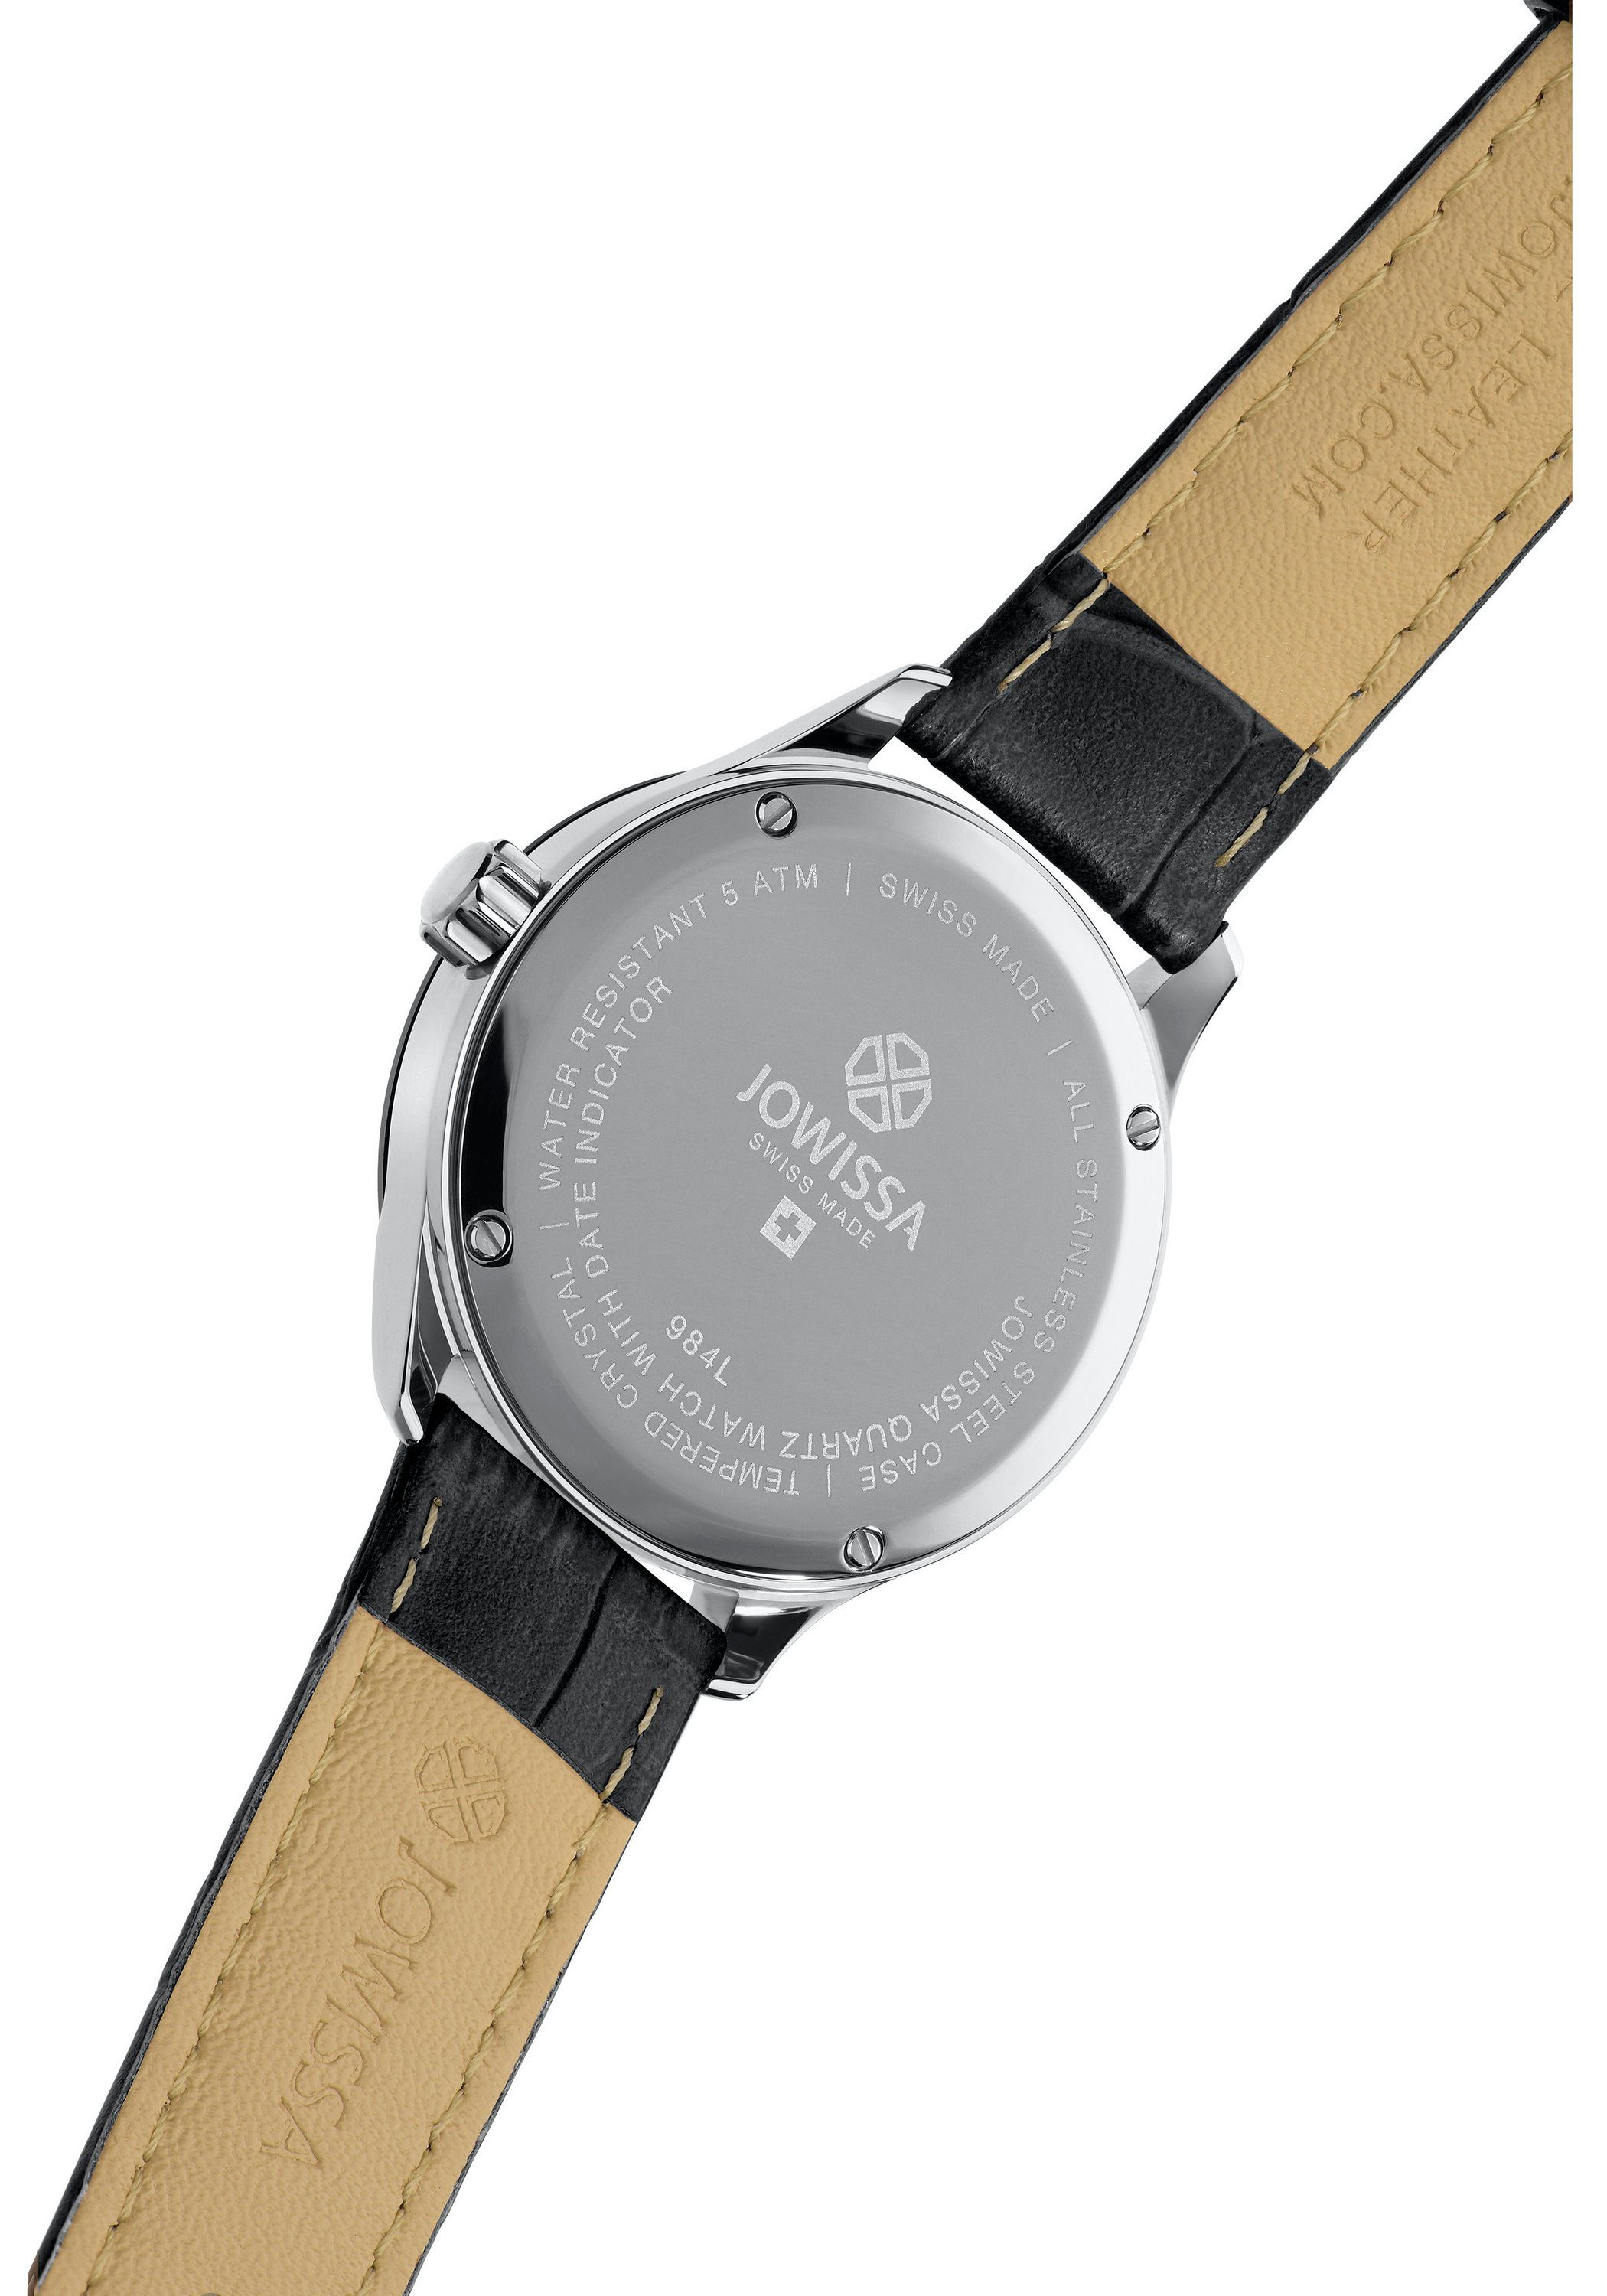 JOWISSA Quarzuhr Tiro Watch Made Swiss